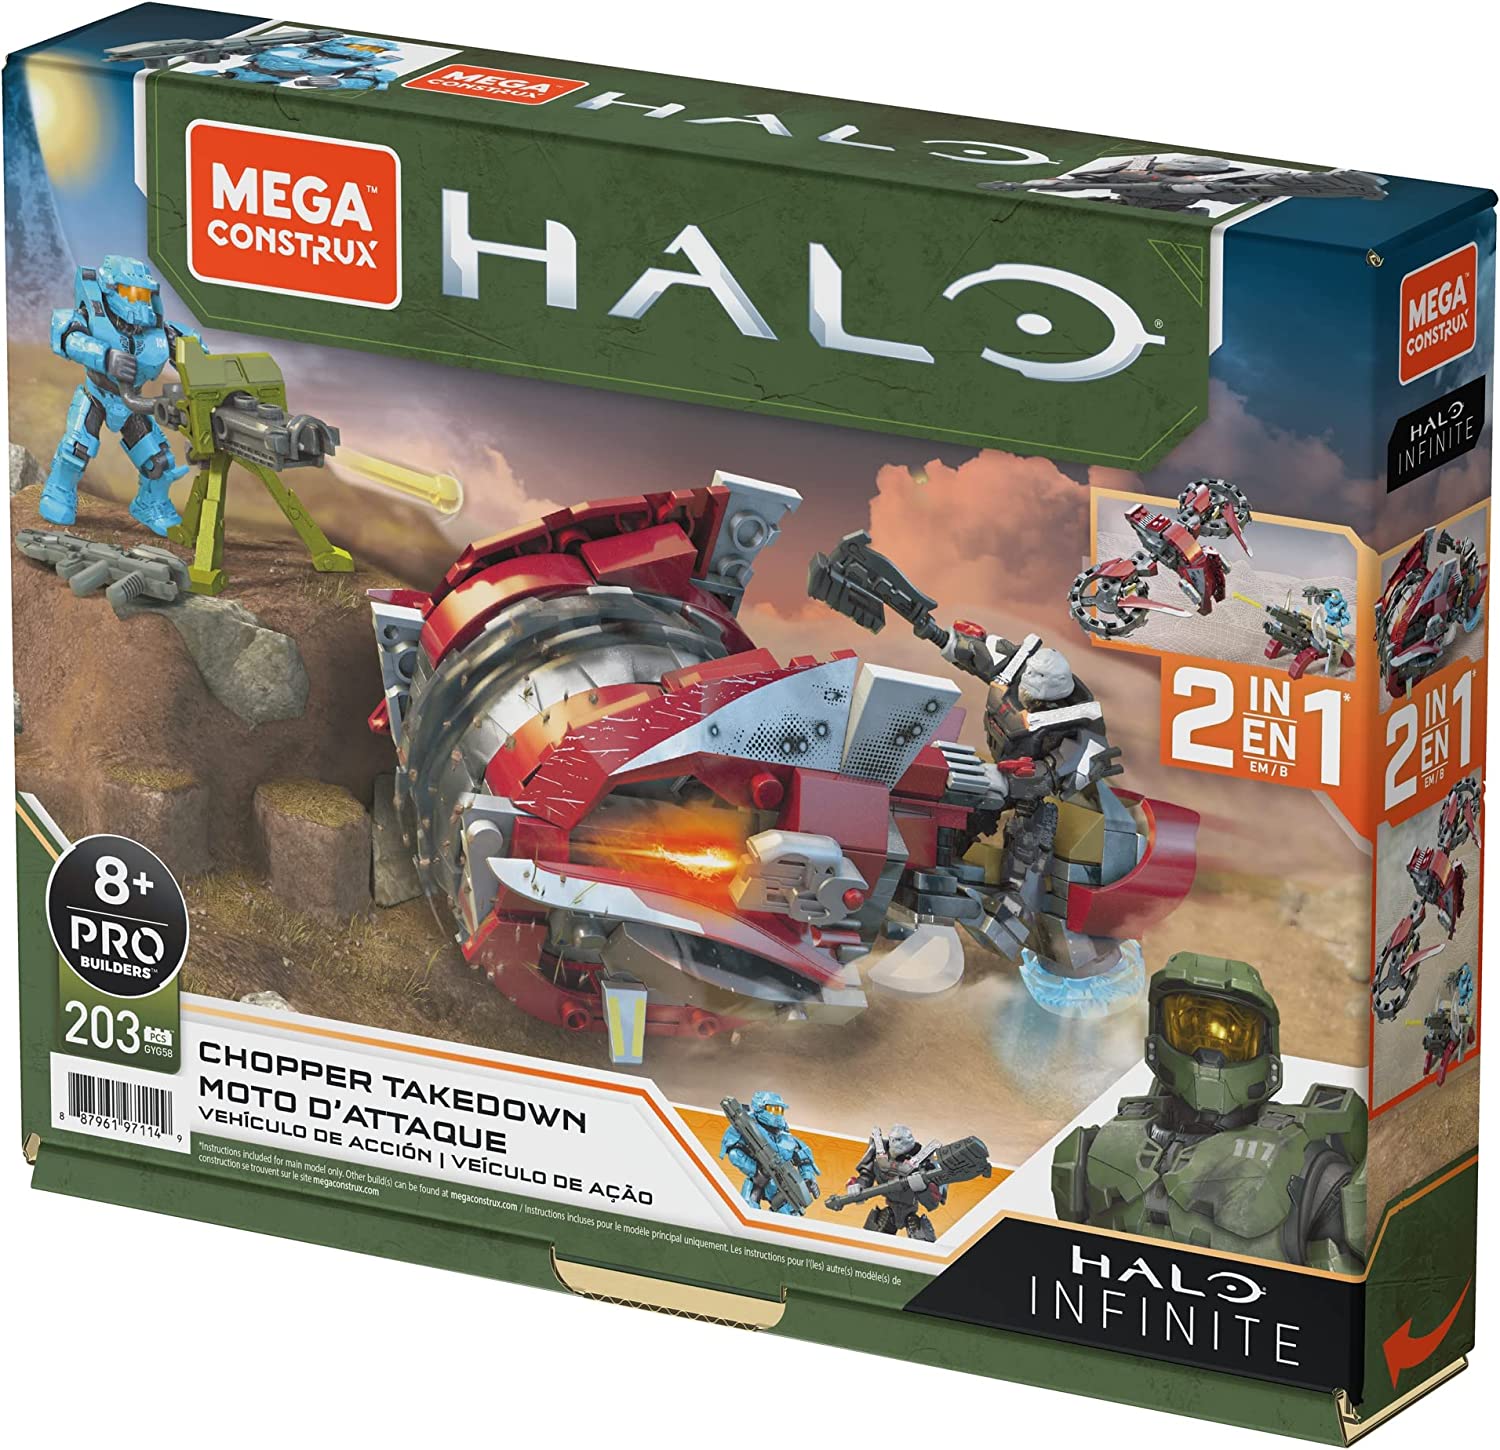 203-Pc Mega Construx Halo Chopper Takedown Vehicle Halo Infinite Construction Set $7 + Free Shipping w/ Amazon Prime or Orders $25+